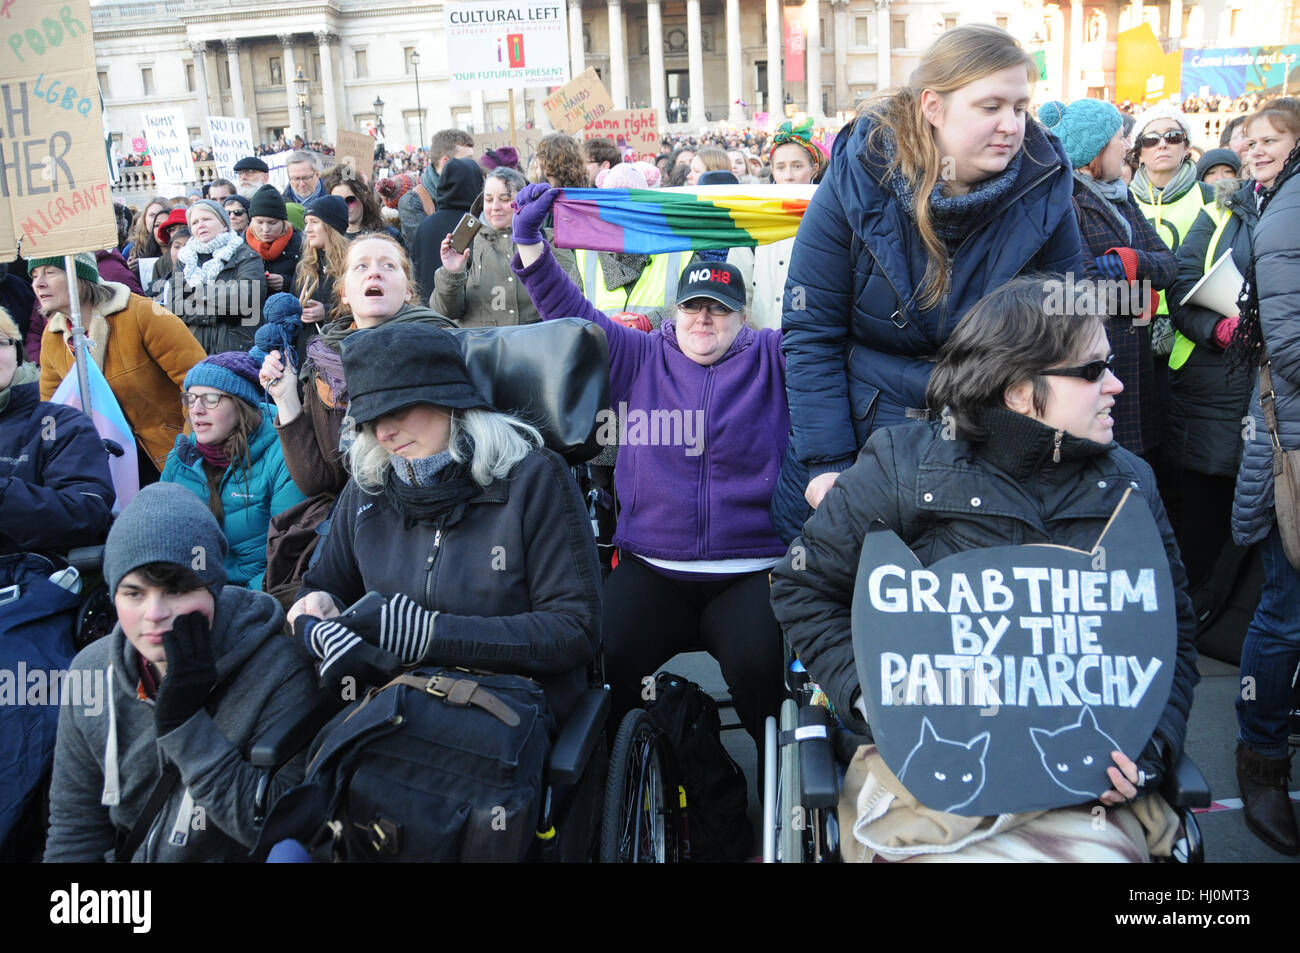 London mayor, Sadiq Khan, supports women's rights, at an Anti- Trump protest in London's Trafalgar square. Stock Photo